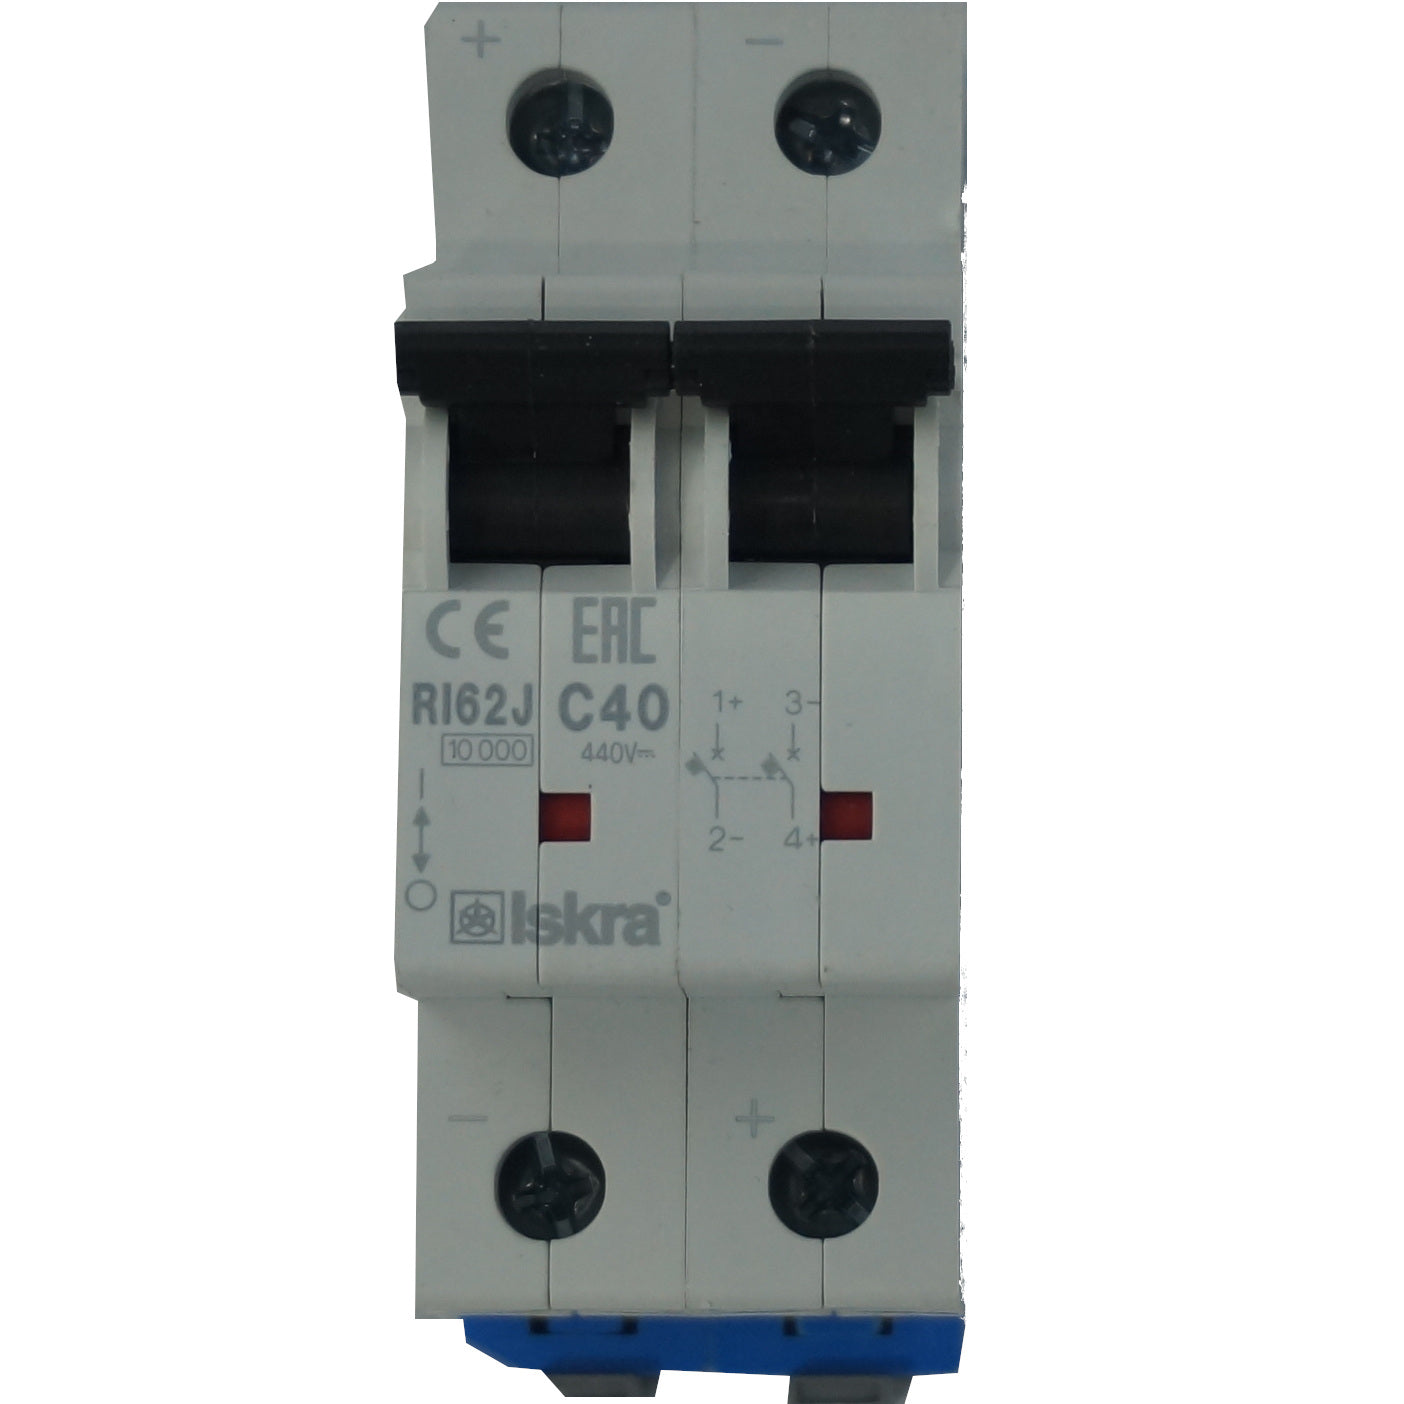 RI62J C 1-10kA, 2 Pole DC Miniature Circuit Breaker Disconnect Switch C Curve 1 Amp, 440VDC, 10kA